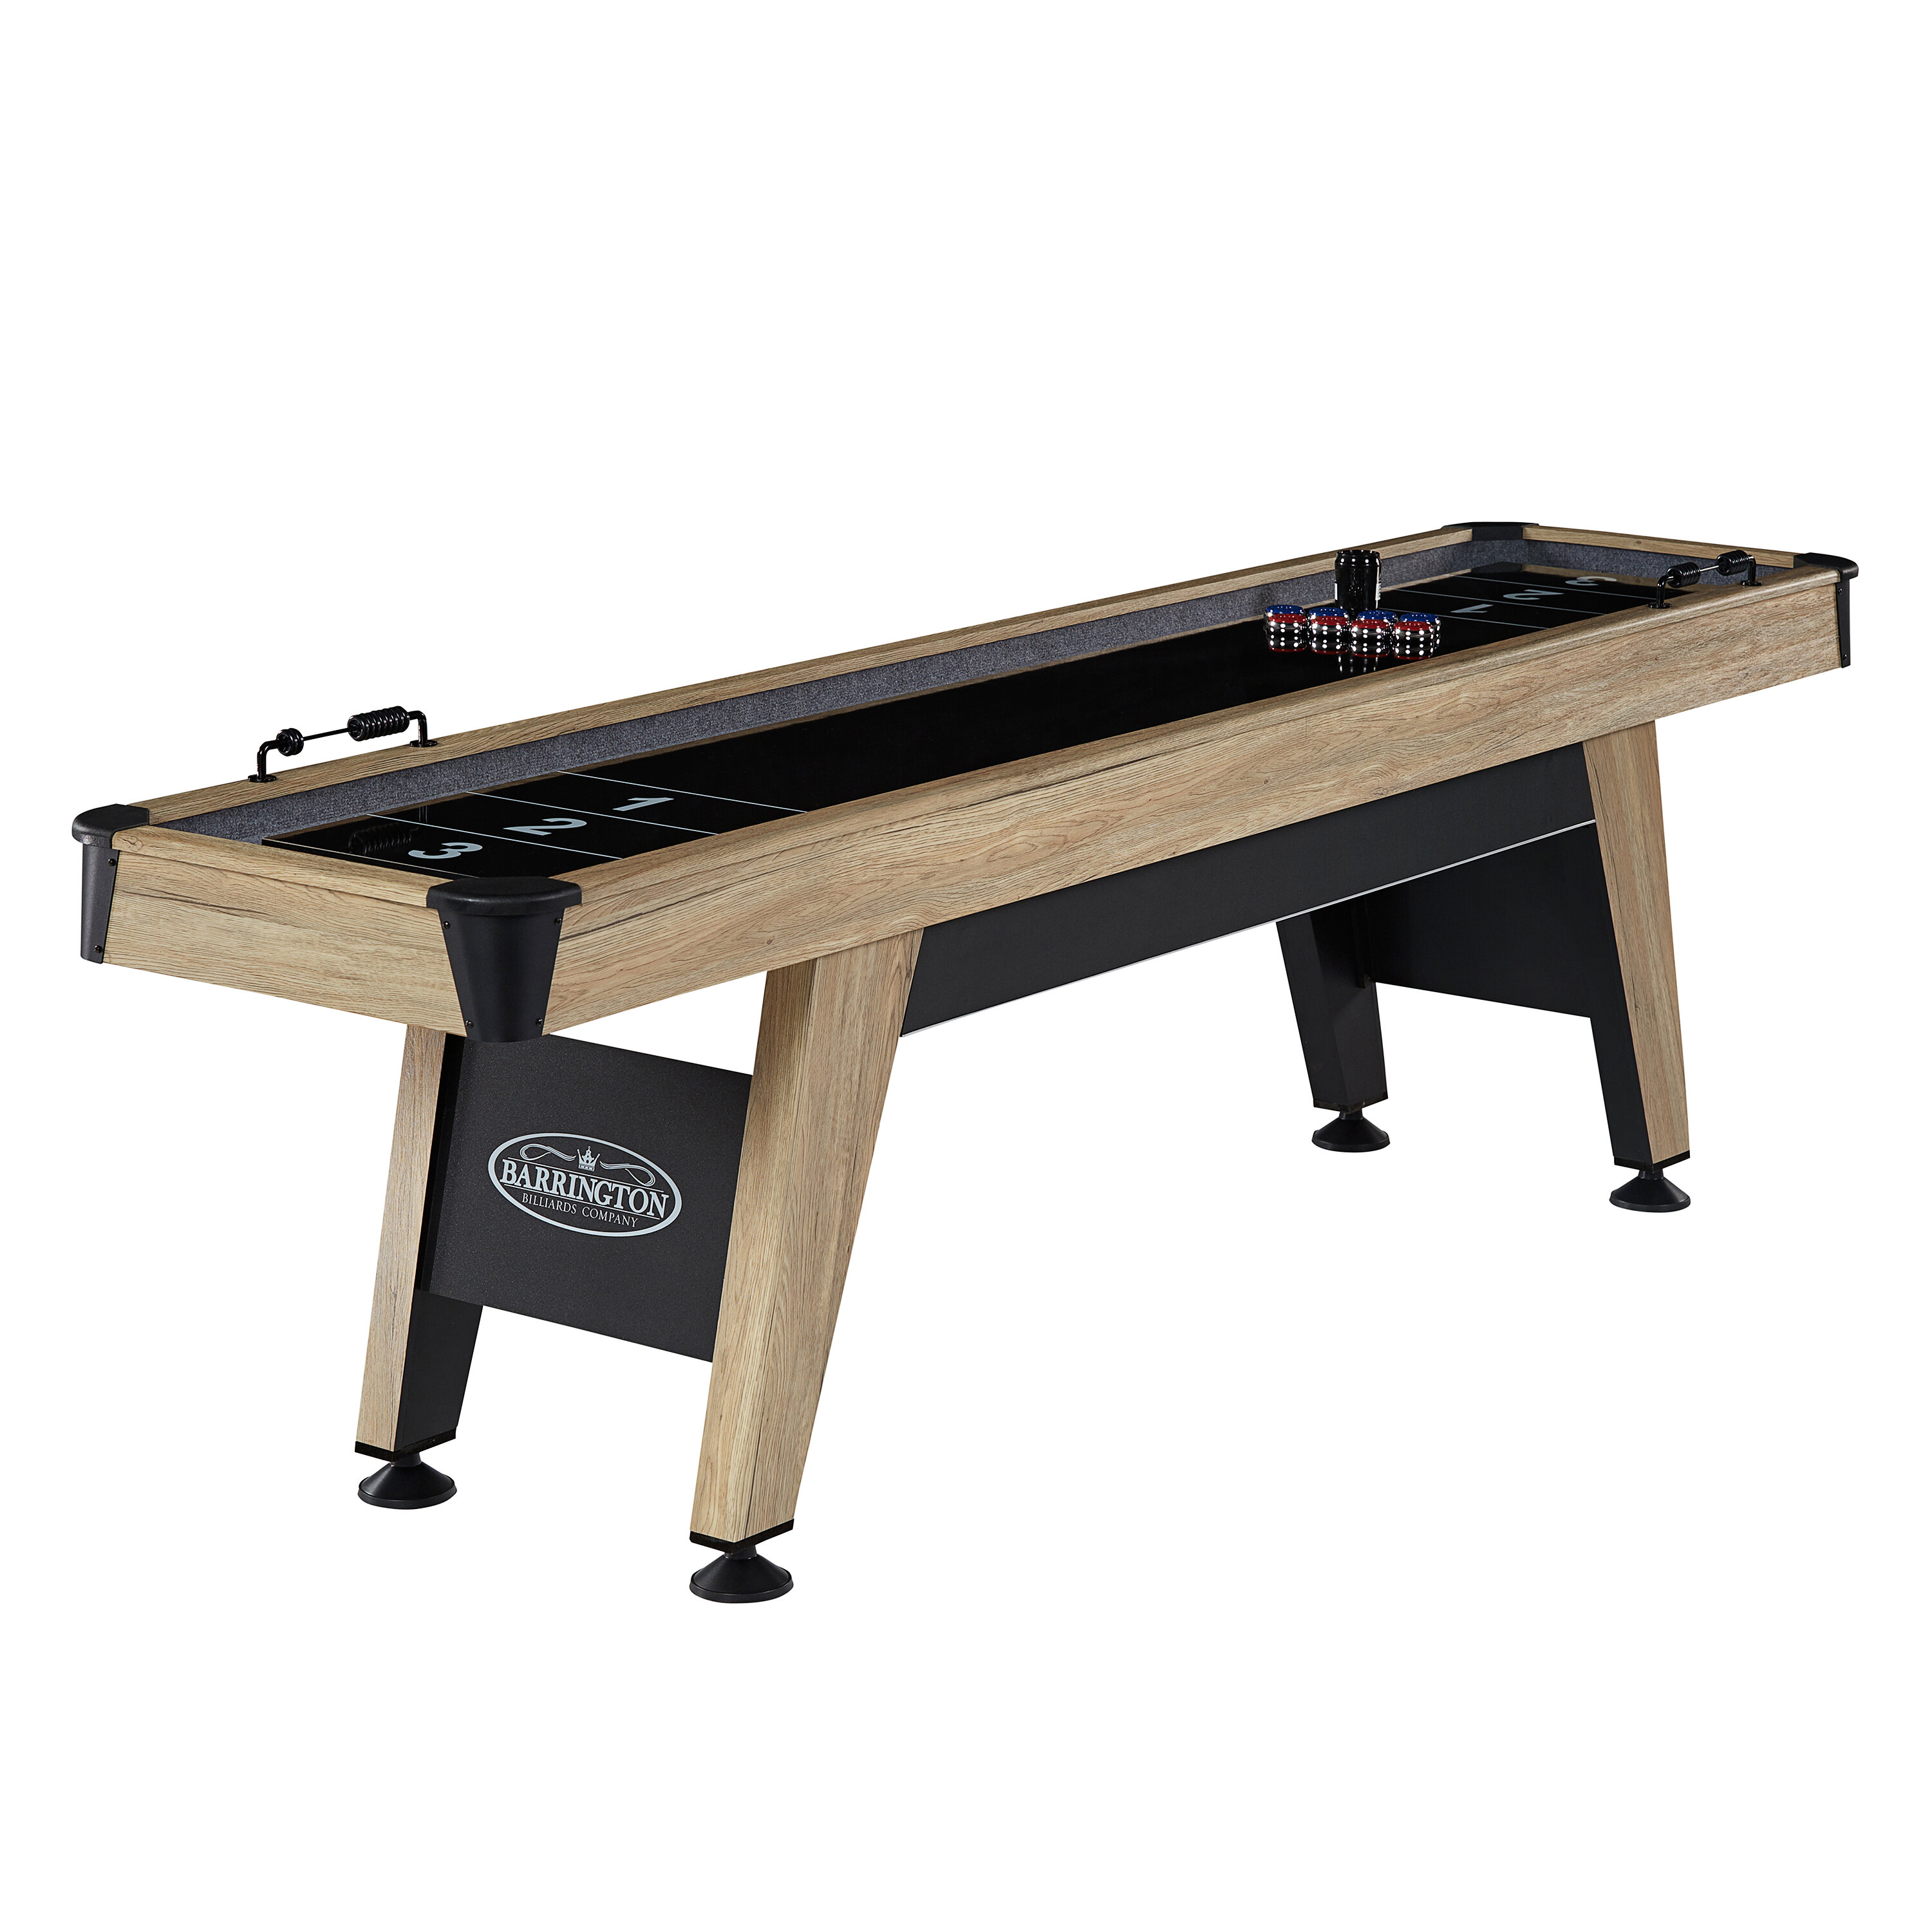 Barrington Billiards Company 9' Shuffleboard Table & Reviews